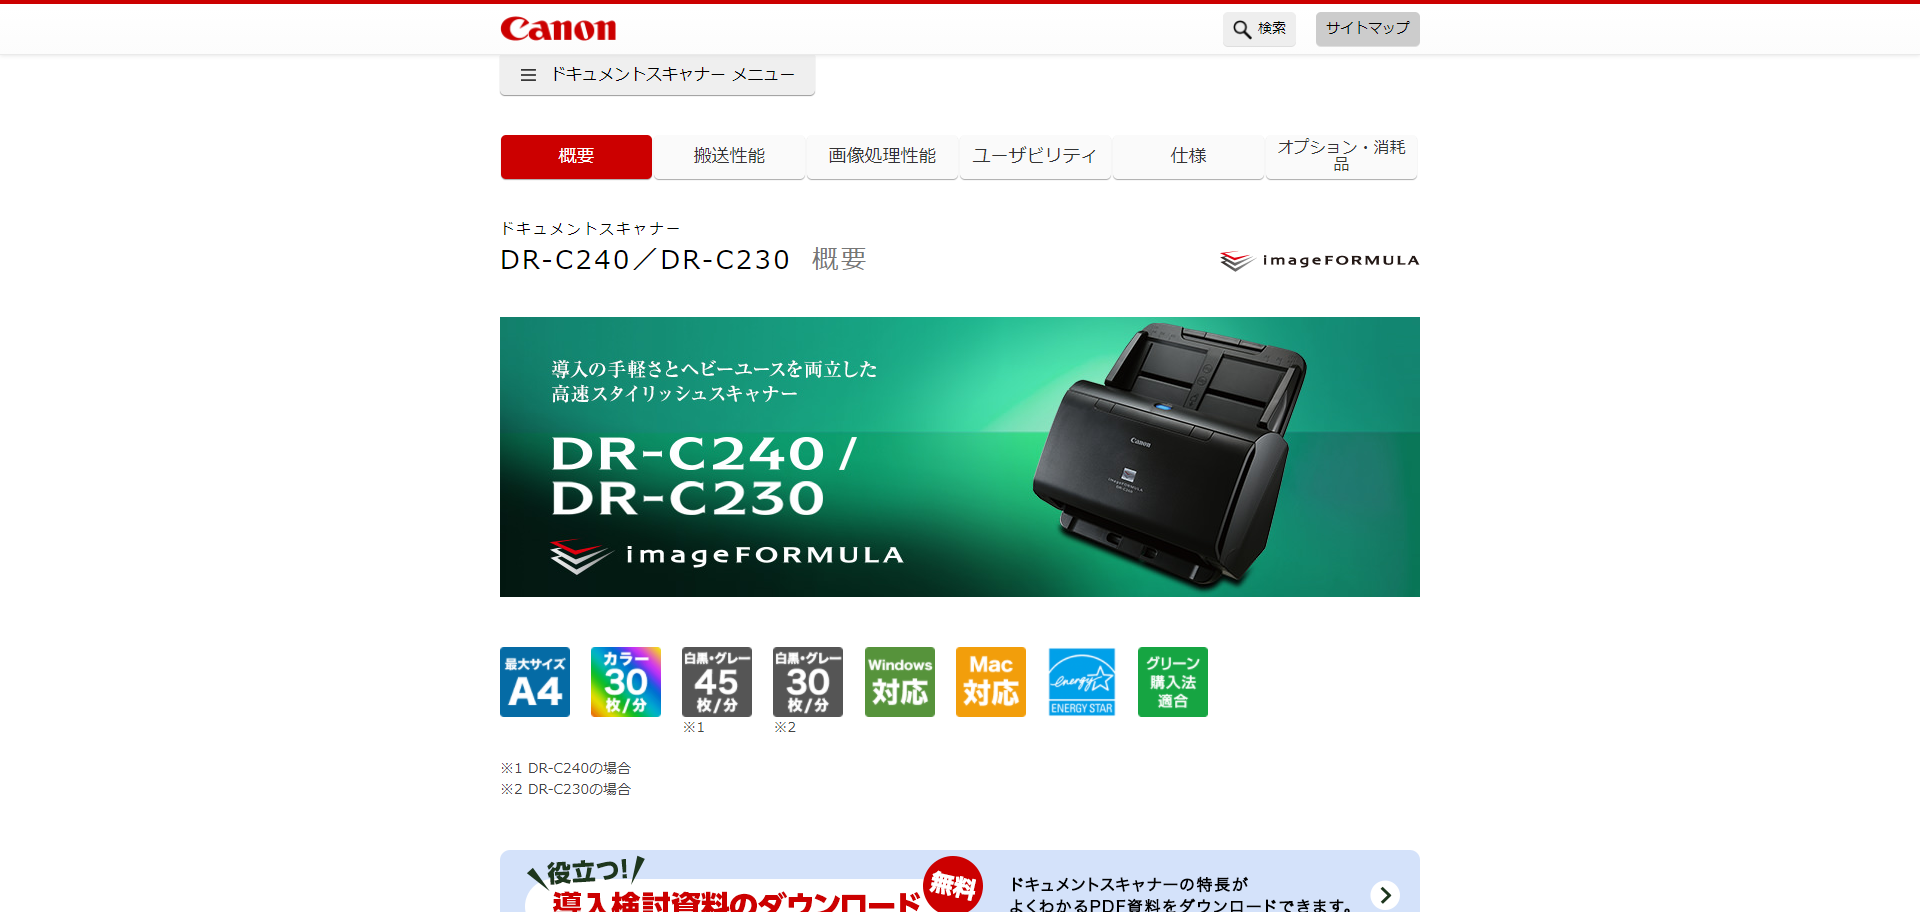 Canon DR-C230 imageFORMULA ドキュメントスキャナー